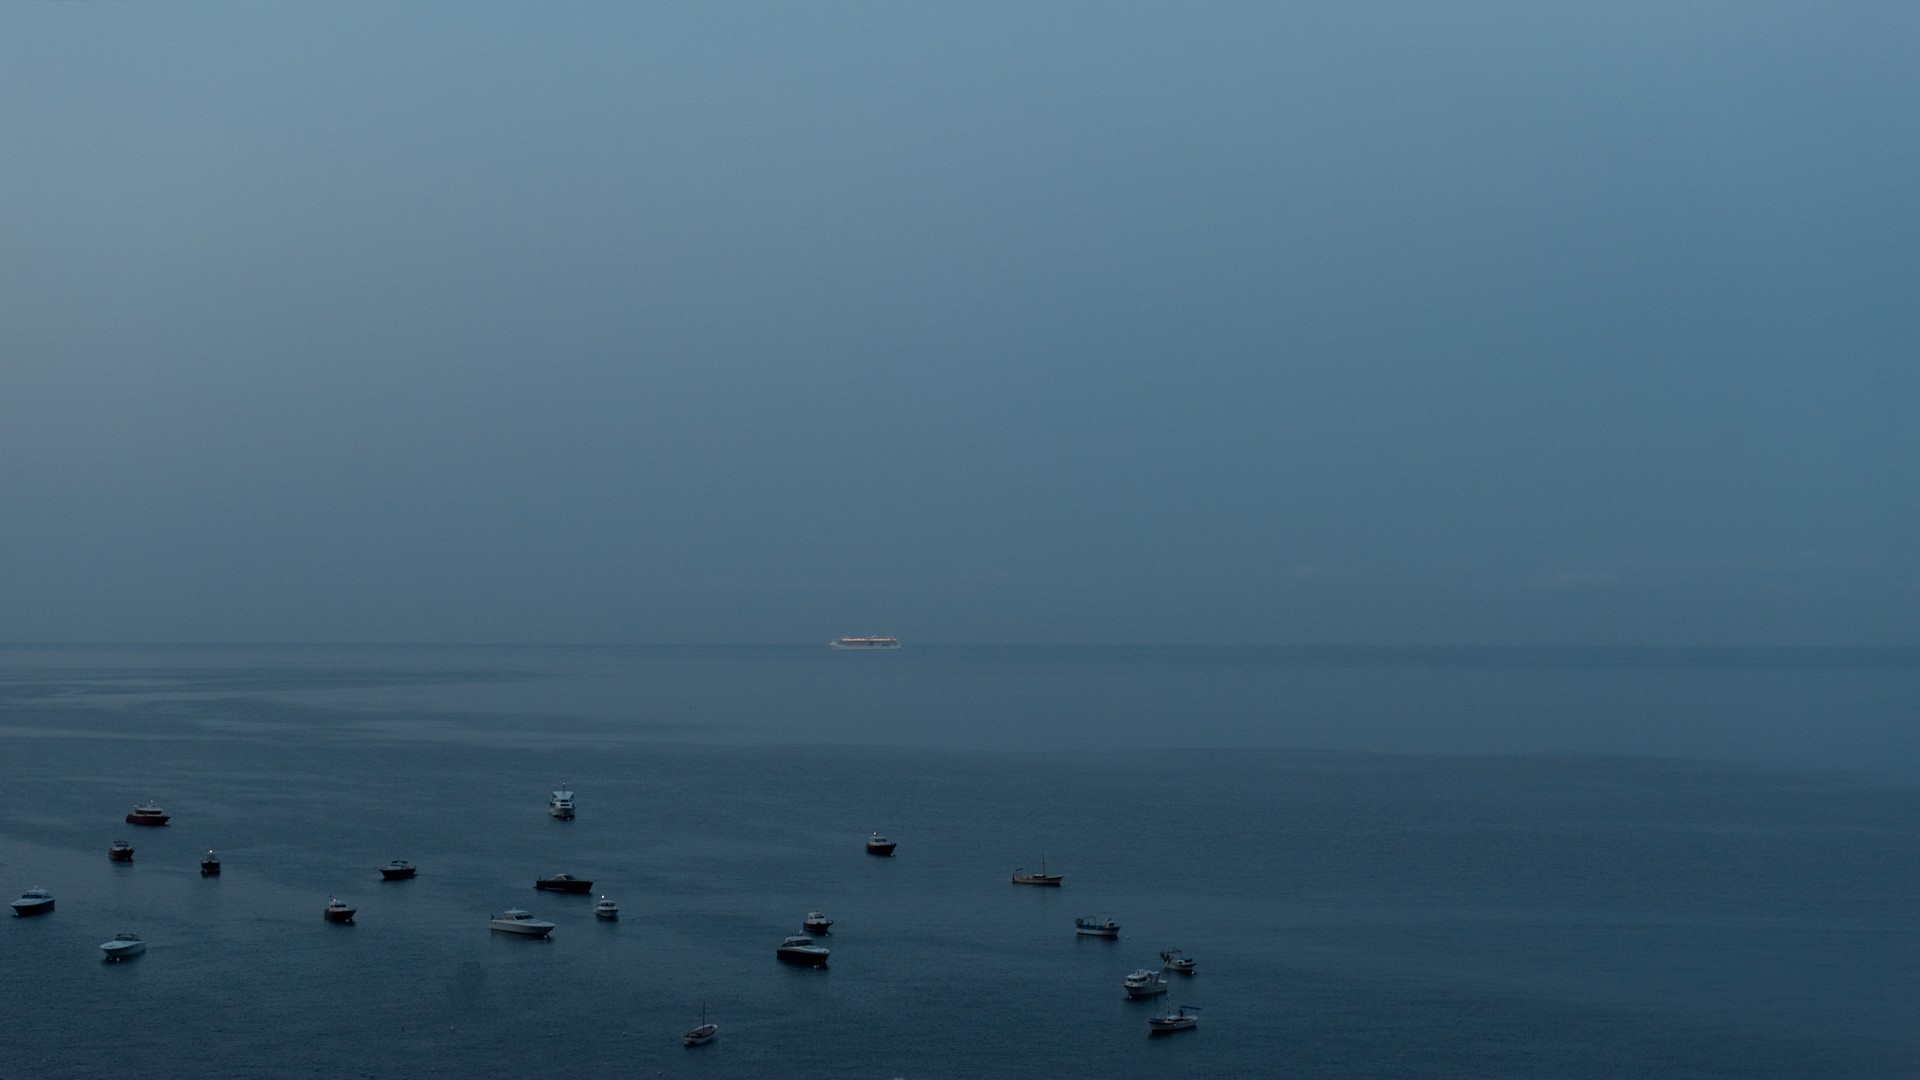 Lightscape, Tyrrhenian Sea from Amalfi Coast, Italy  by Tess Atkinson